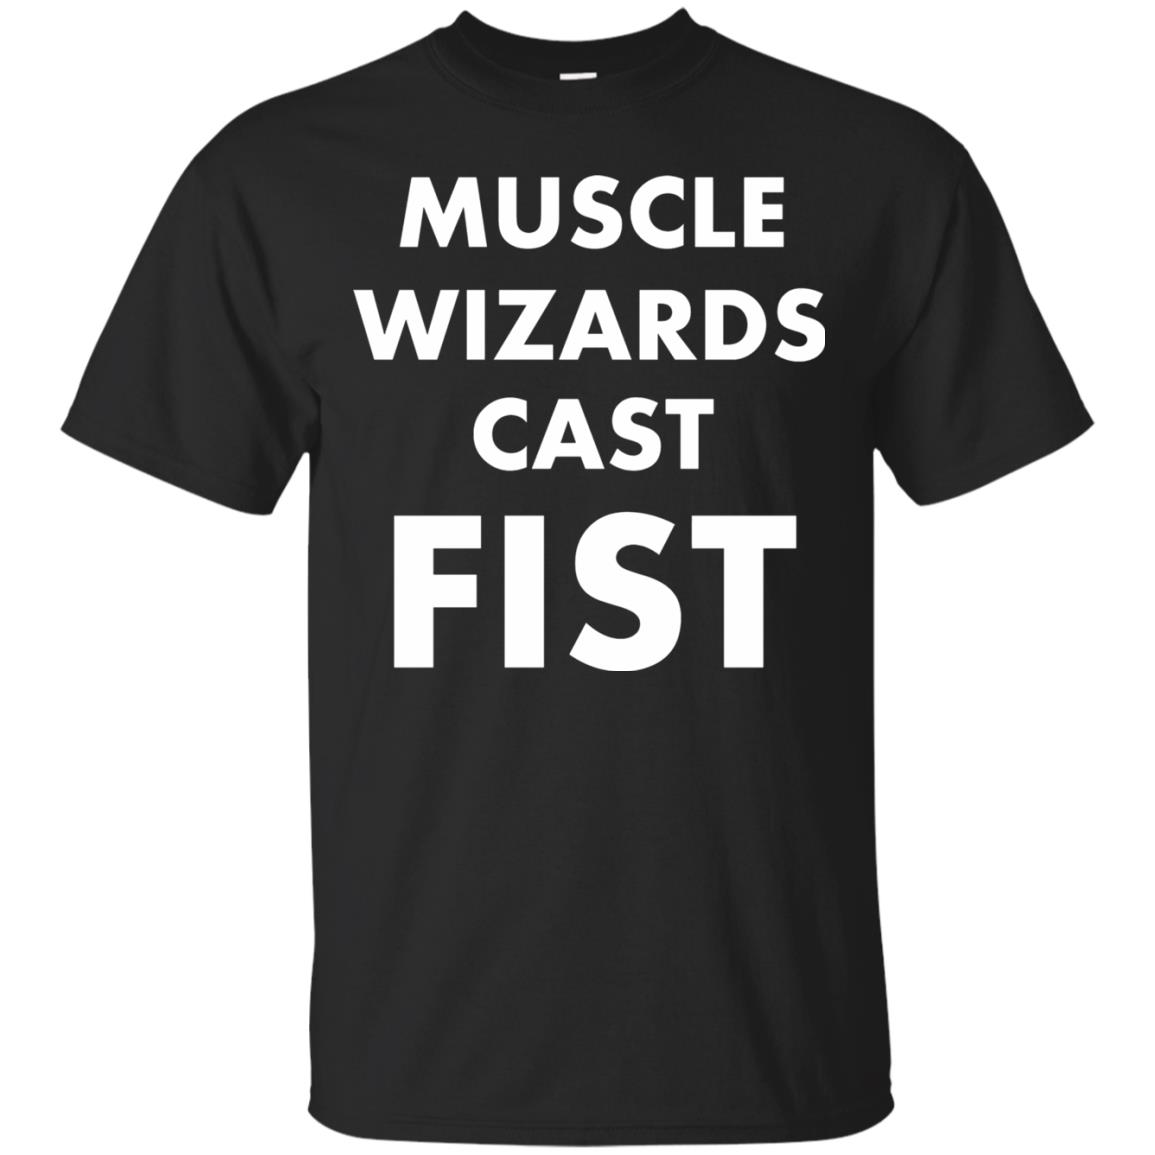 muscle wizards cast fist shirt - black